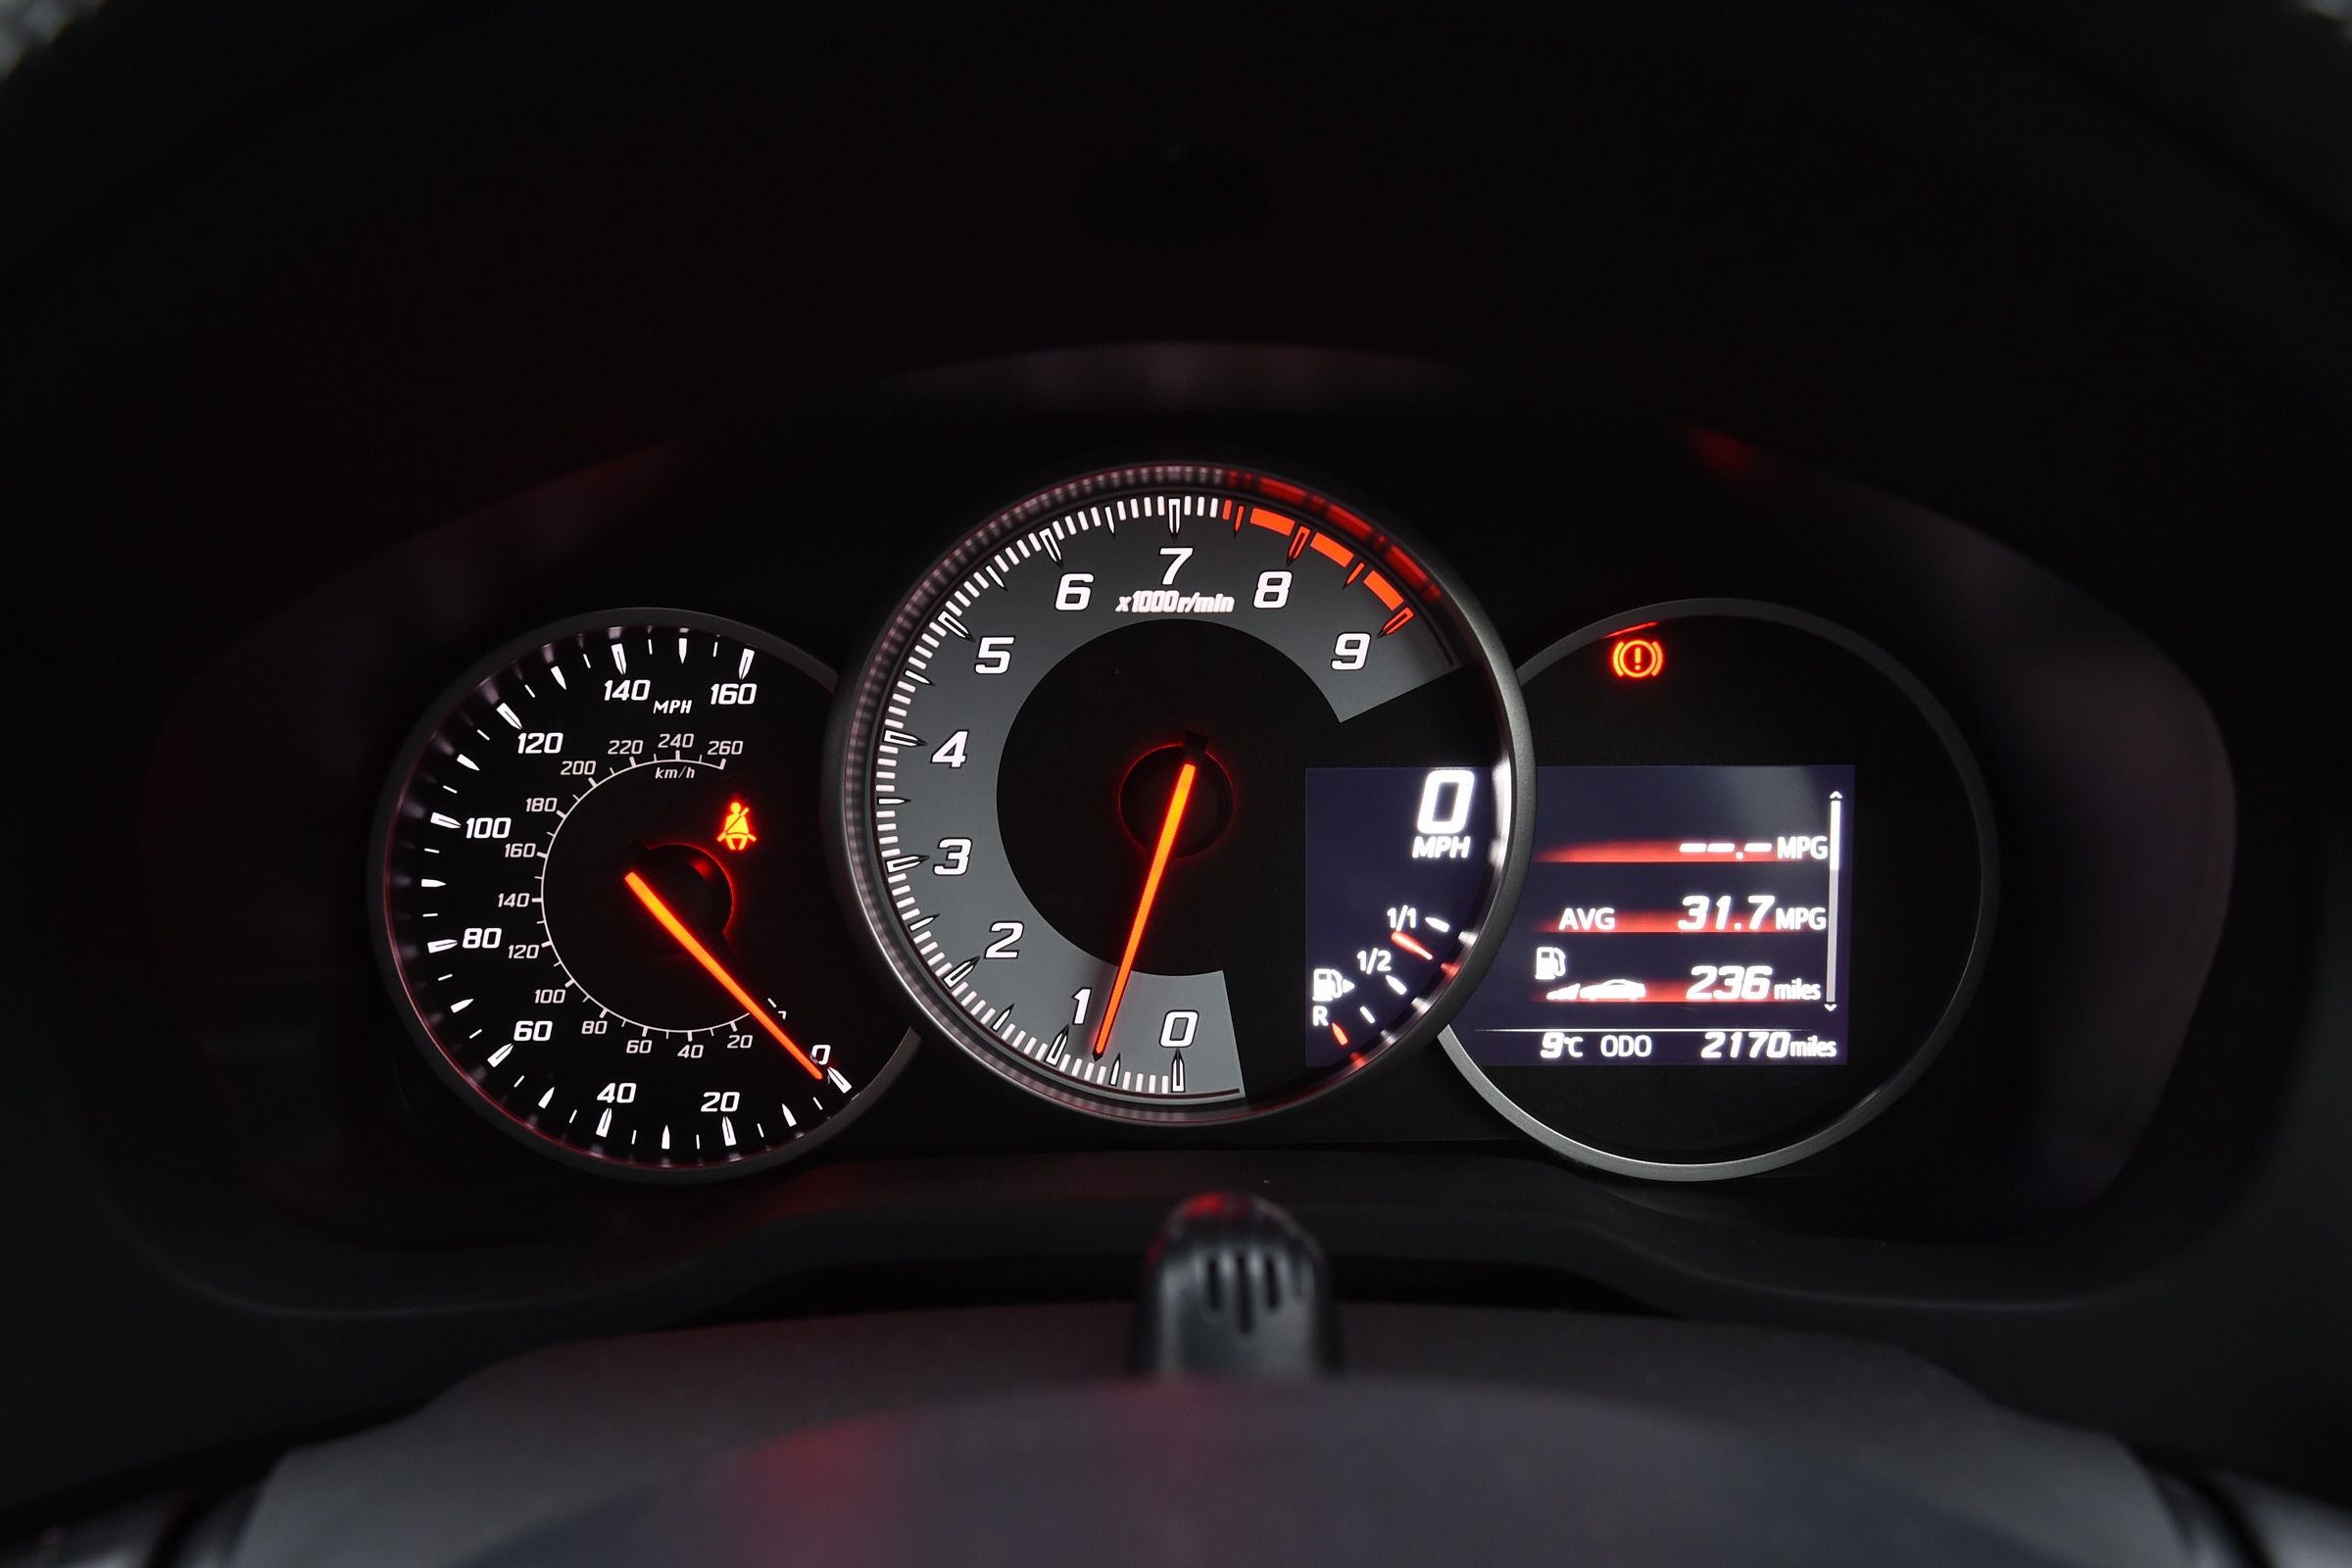 2017 Toyota Gt86 Interior View Speedometer Instrument Cluster (View 2 of 13)